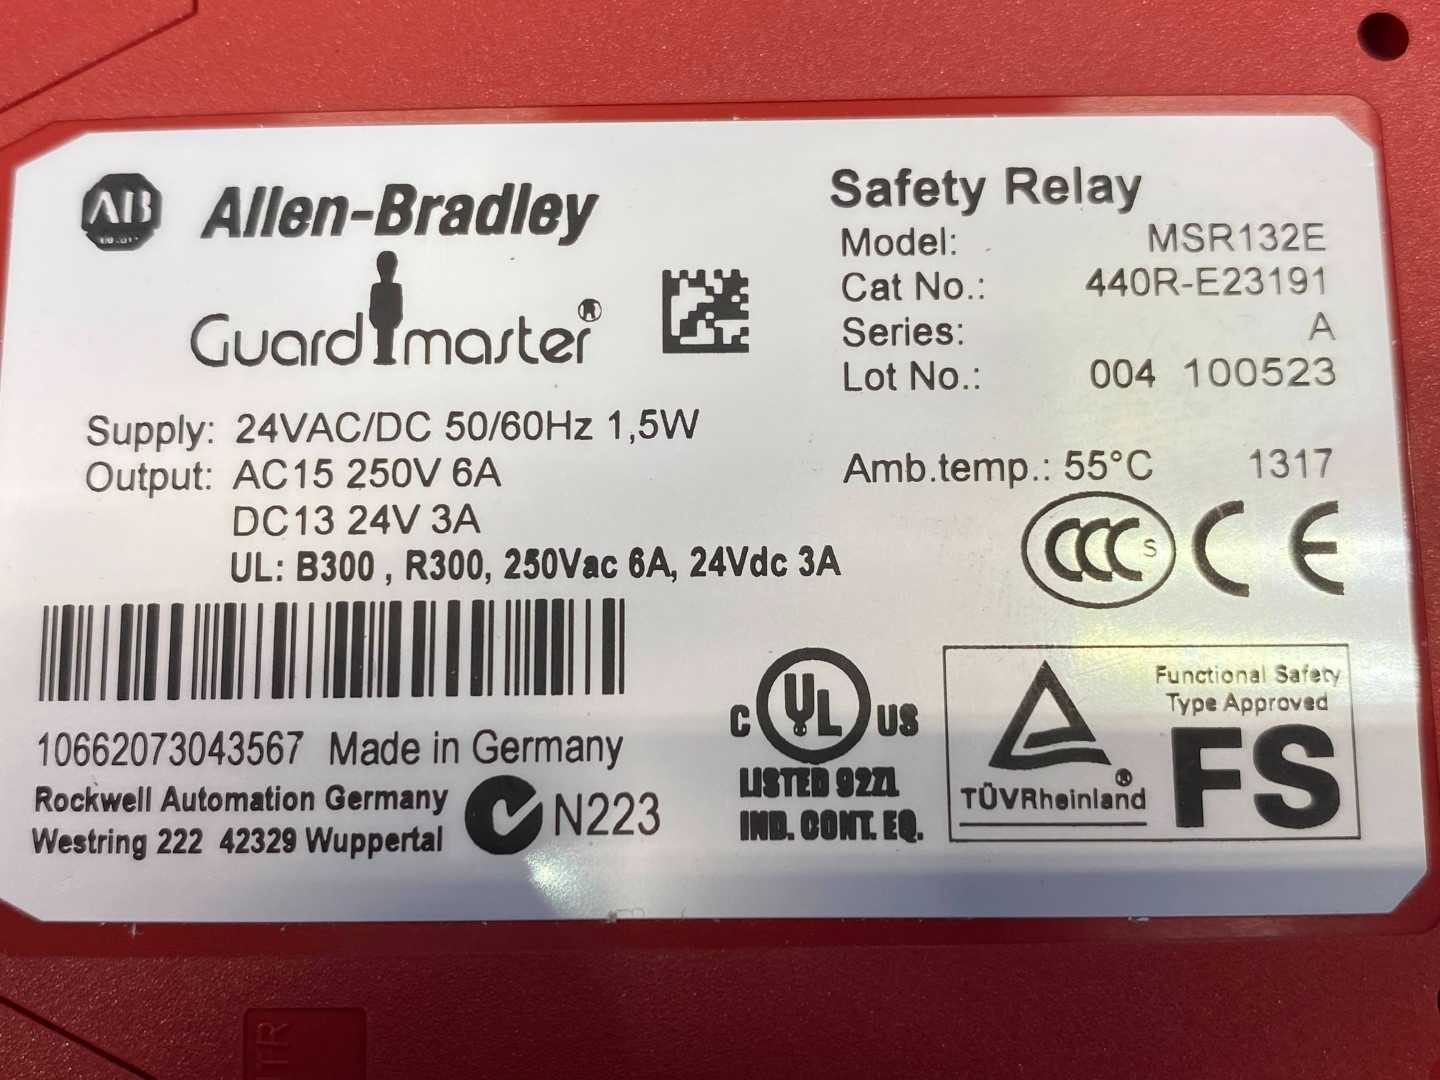 Allen-Bradley Safety Relay MSR132E